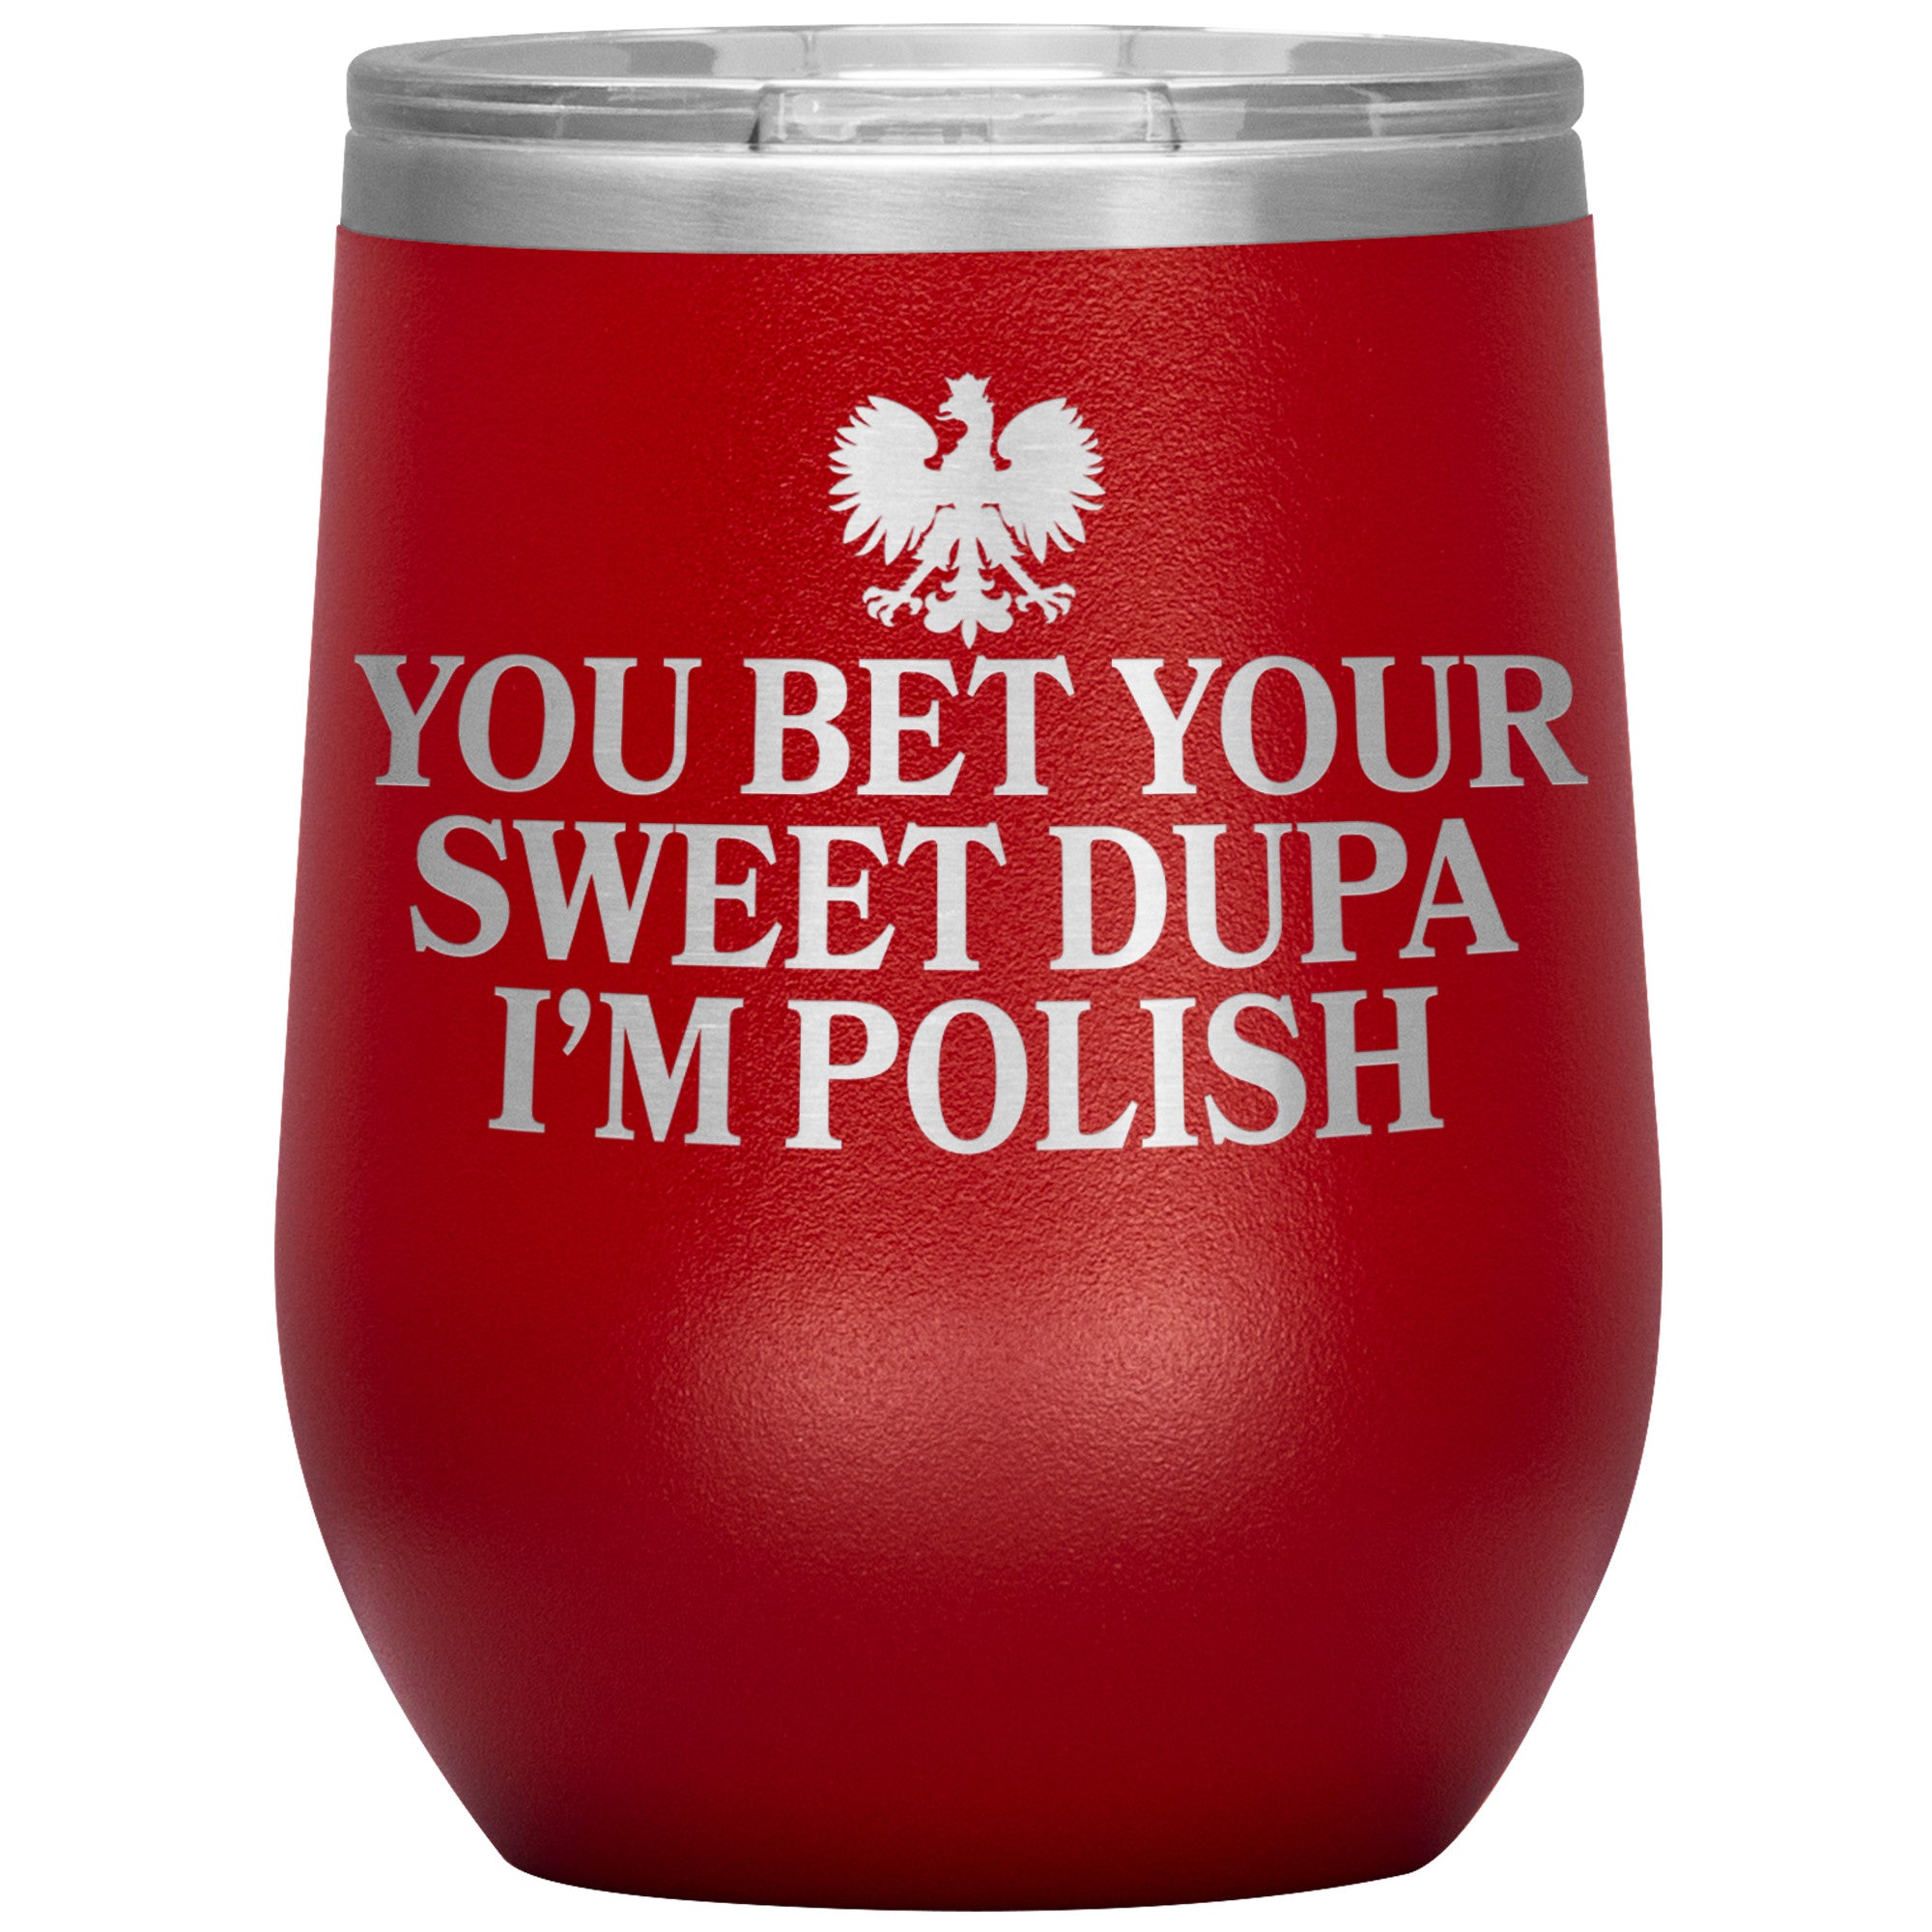 You Bet Your Sweet Dupa I'm Polish Insulated Wine Tumbler Tumblers teelaunch Red  